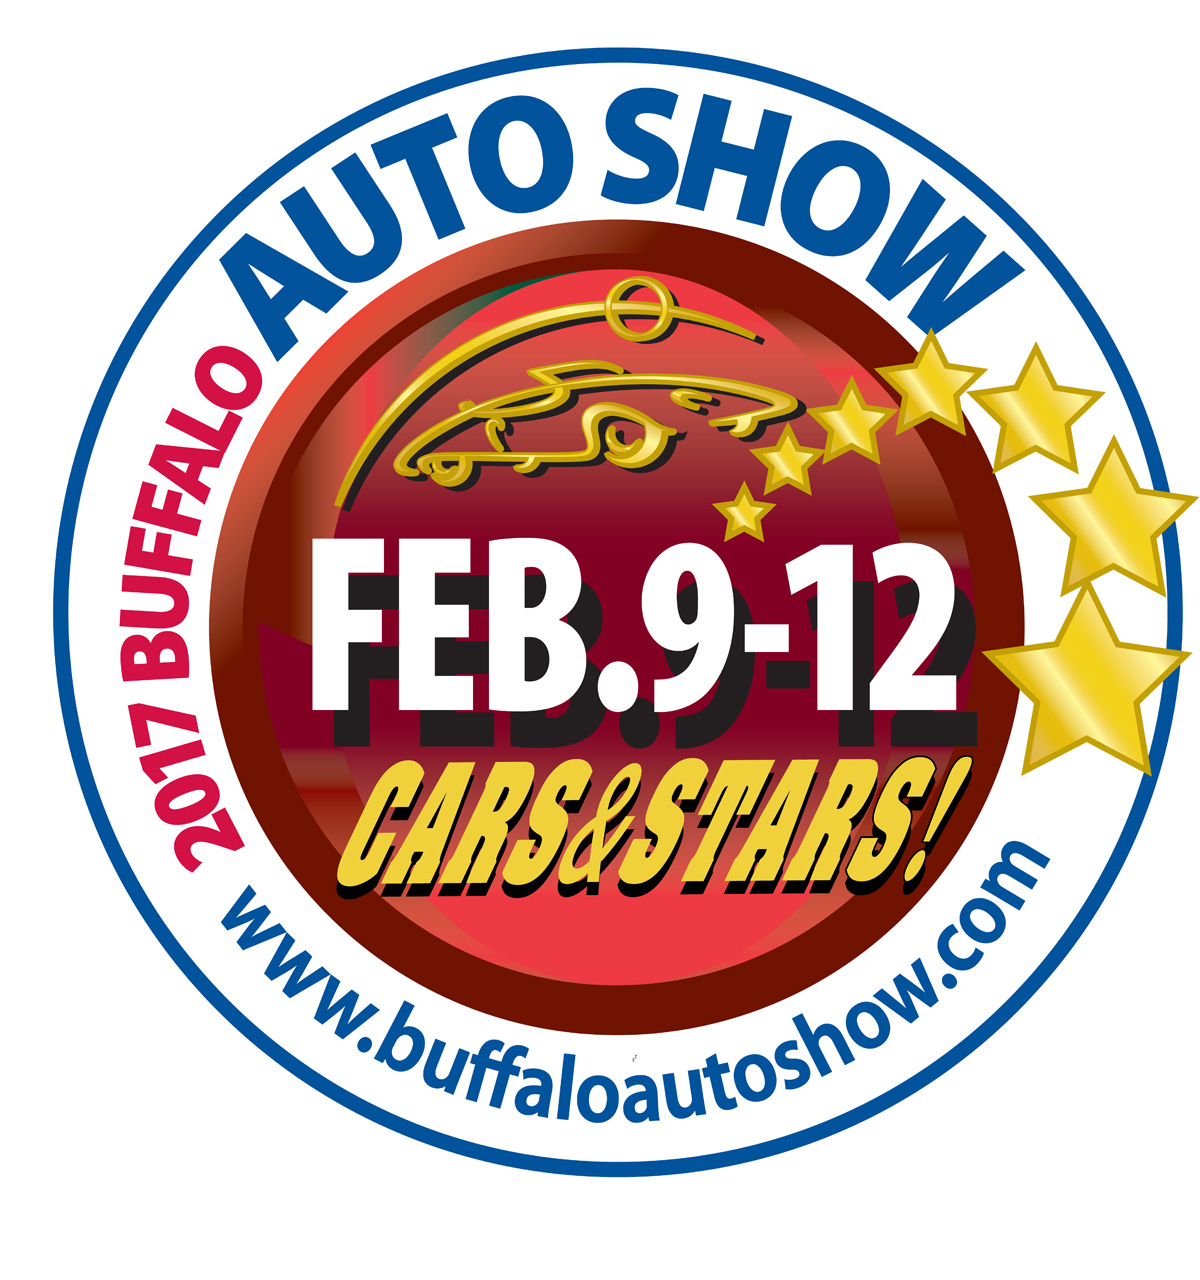 NFADA plans annual Buffalo Auto Show poster contest